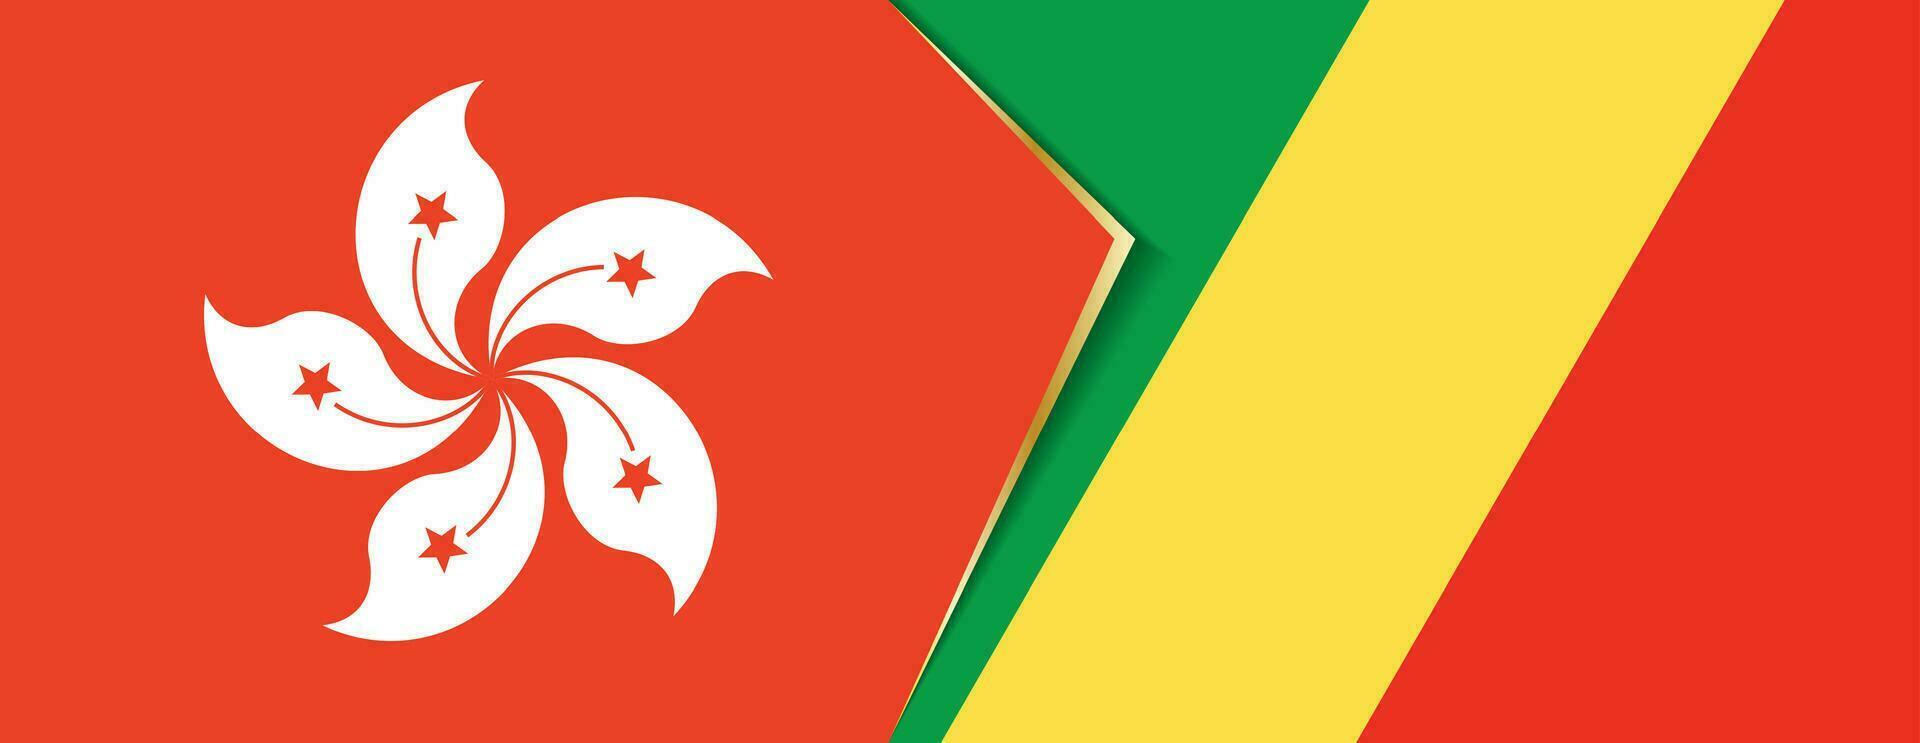 hong Kong en Congo vlaggen, twee vector vlaggen.